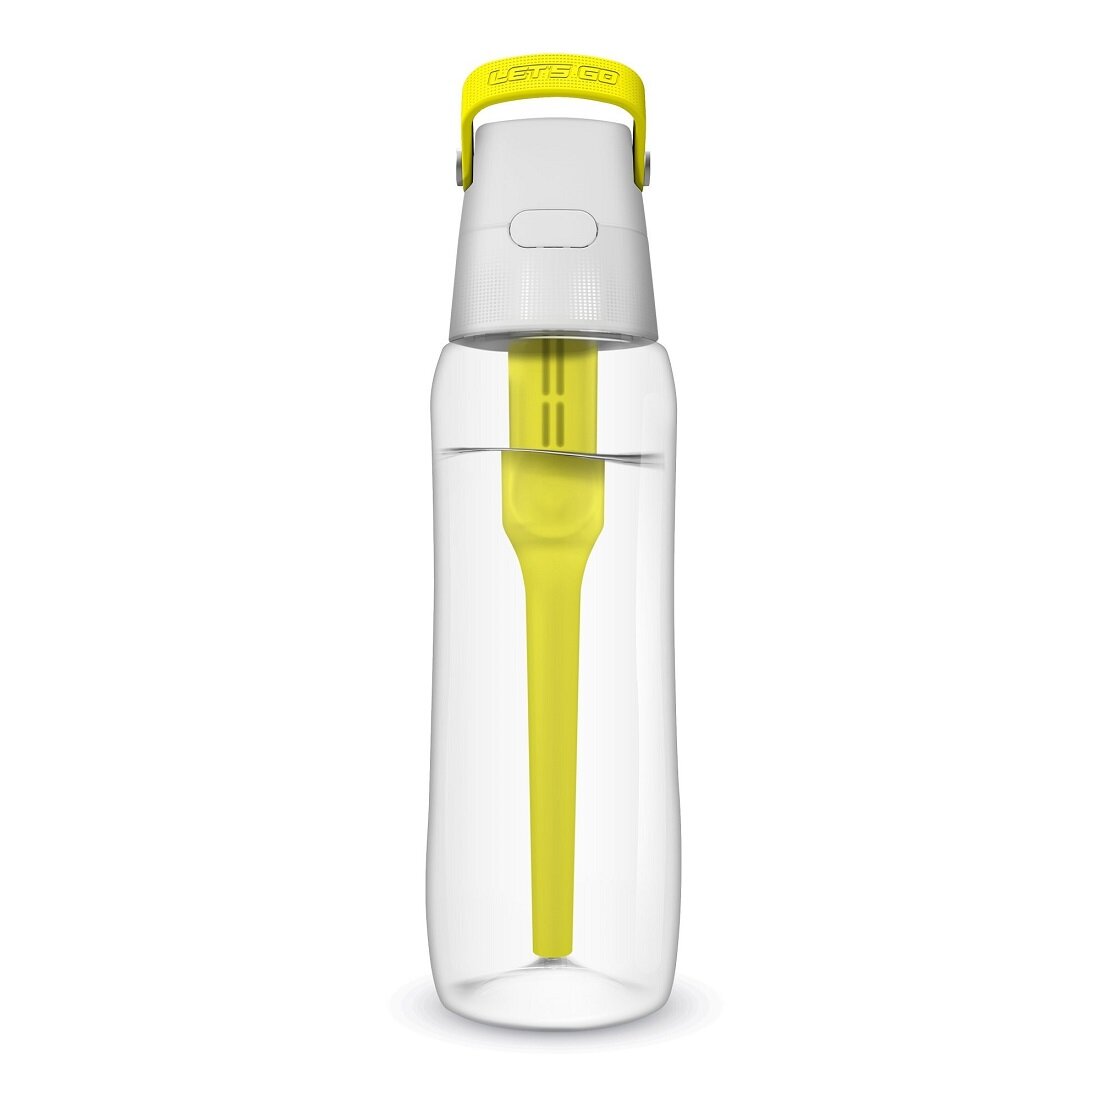 Butelka filtrująca Dafi Solid 0,7L Cytrynowa z przodu